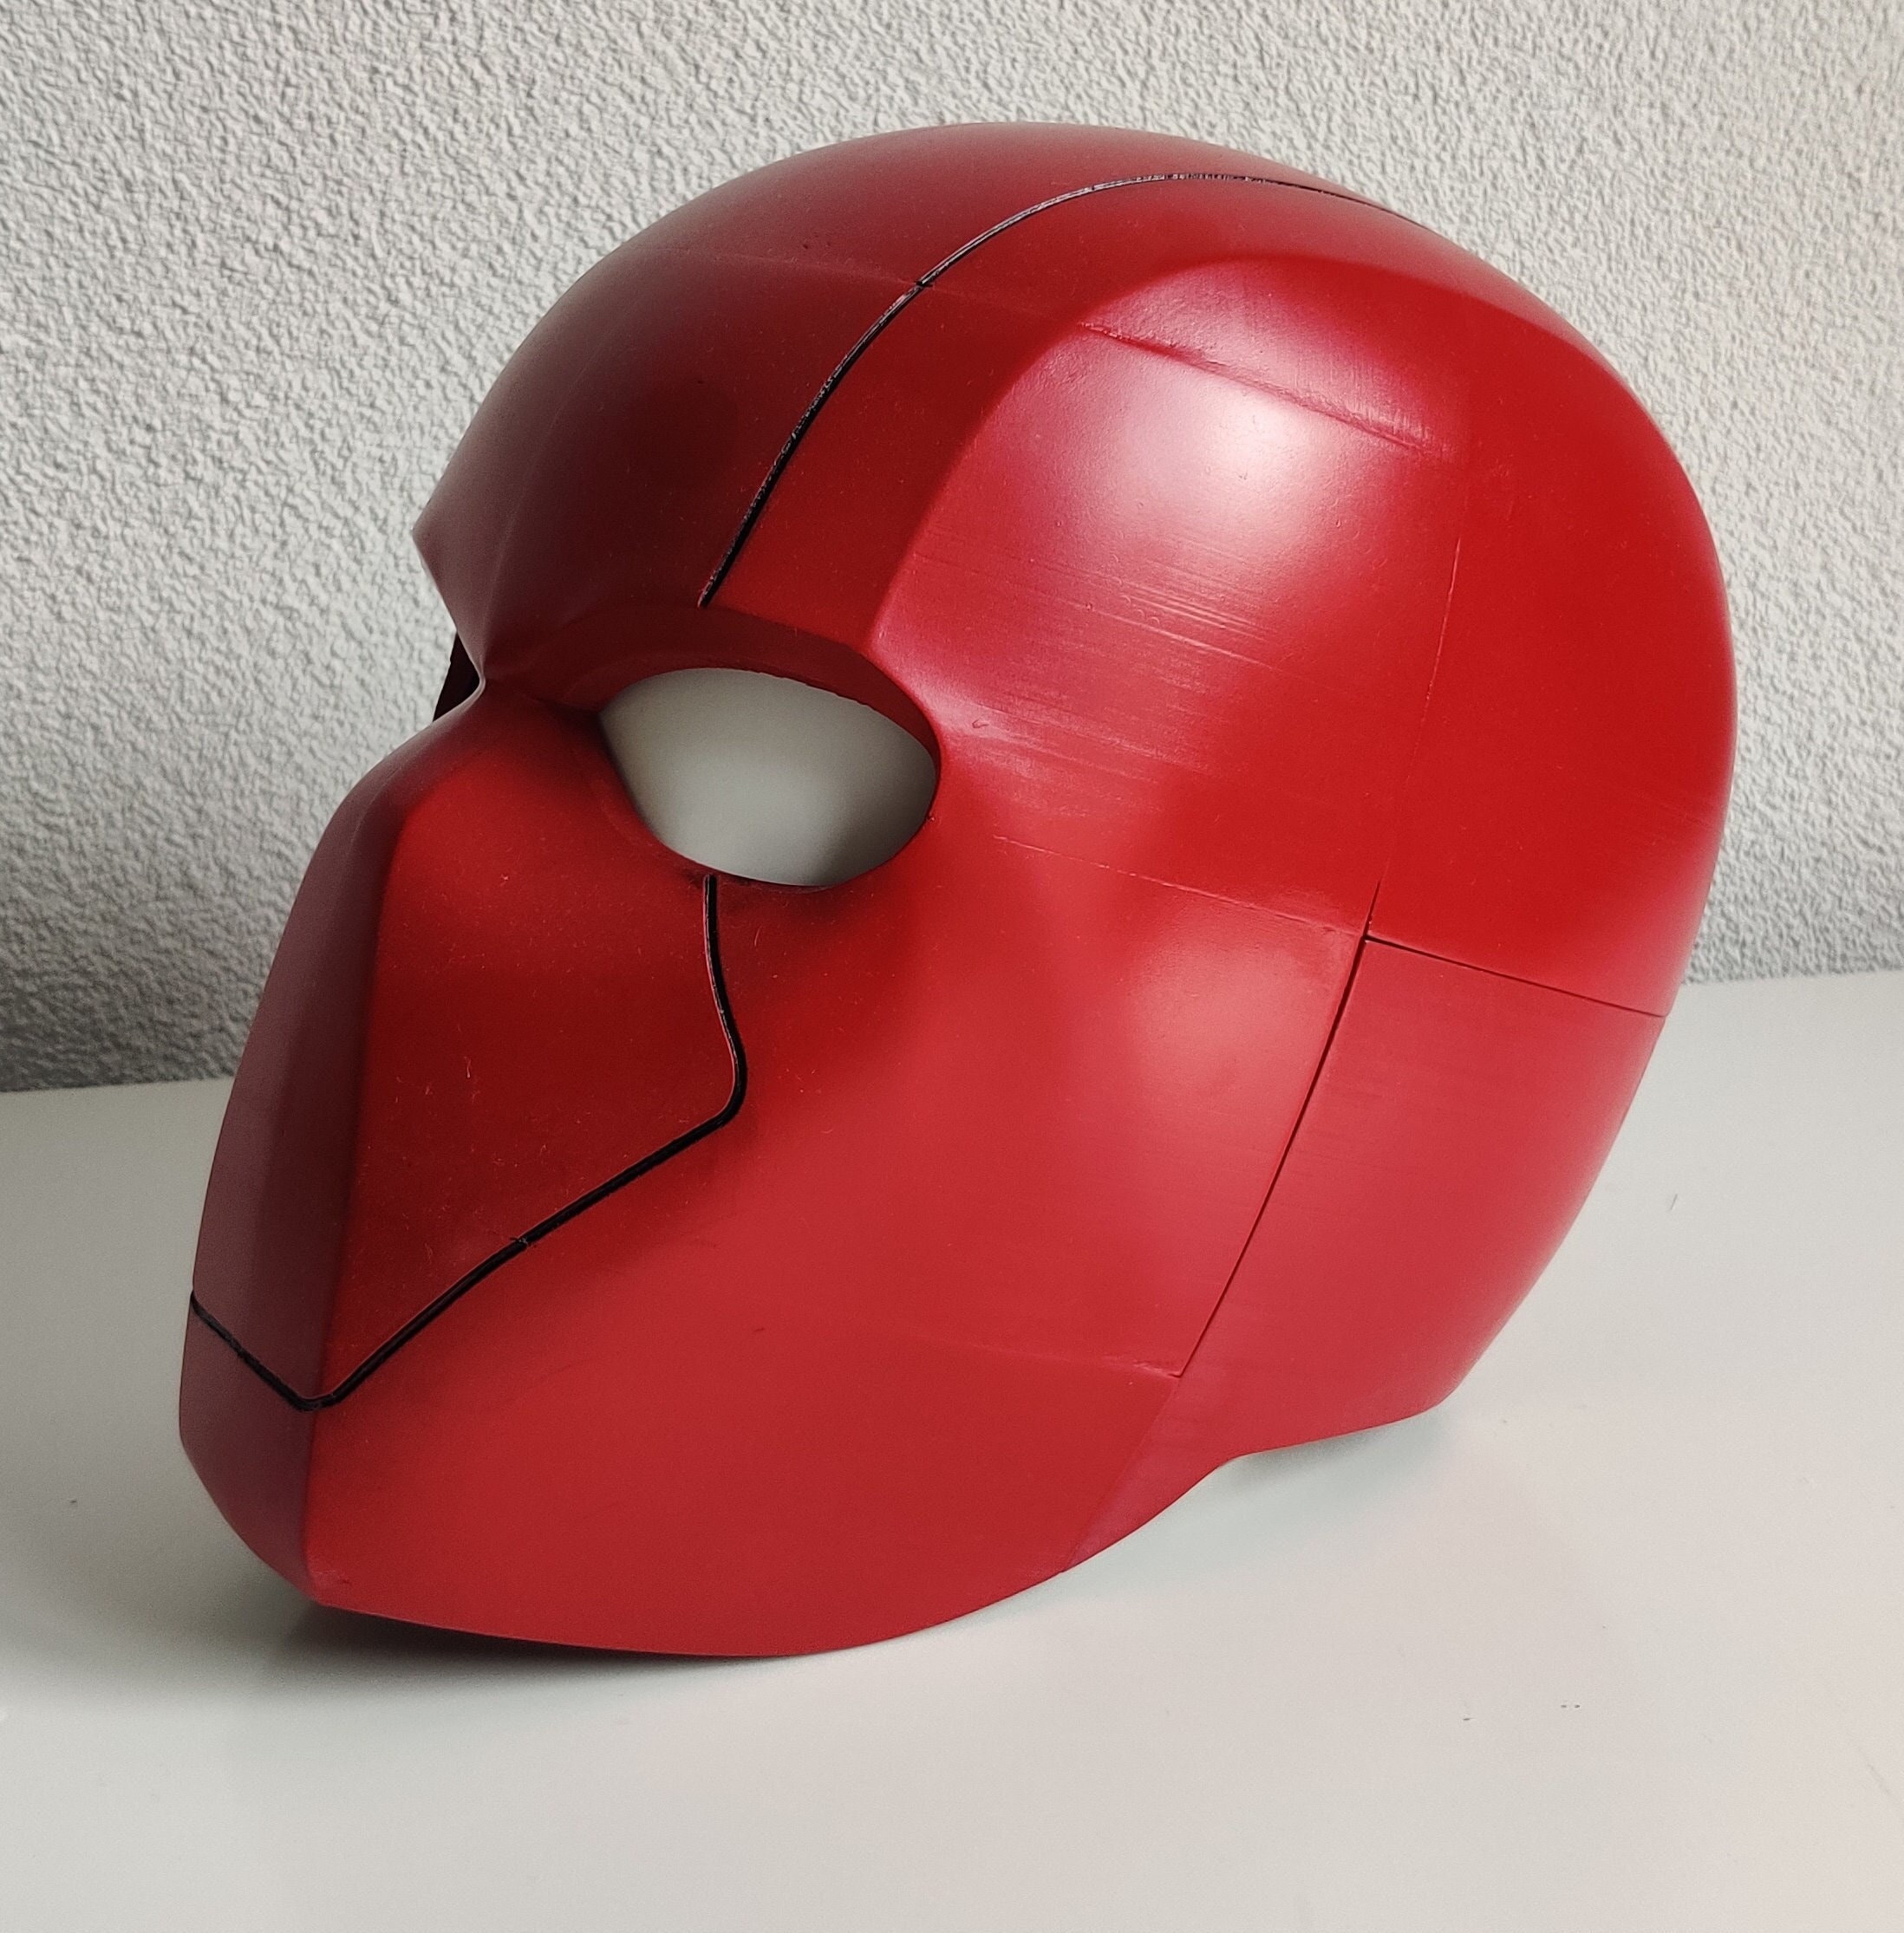 Buy Terry Sawchuk Ice Hockey Mask Goalie Helmet 1:1 Scale Wearable Online  in India 